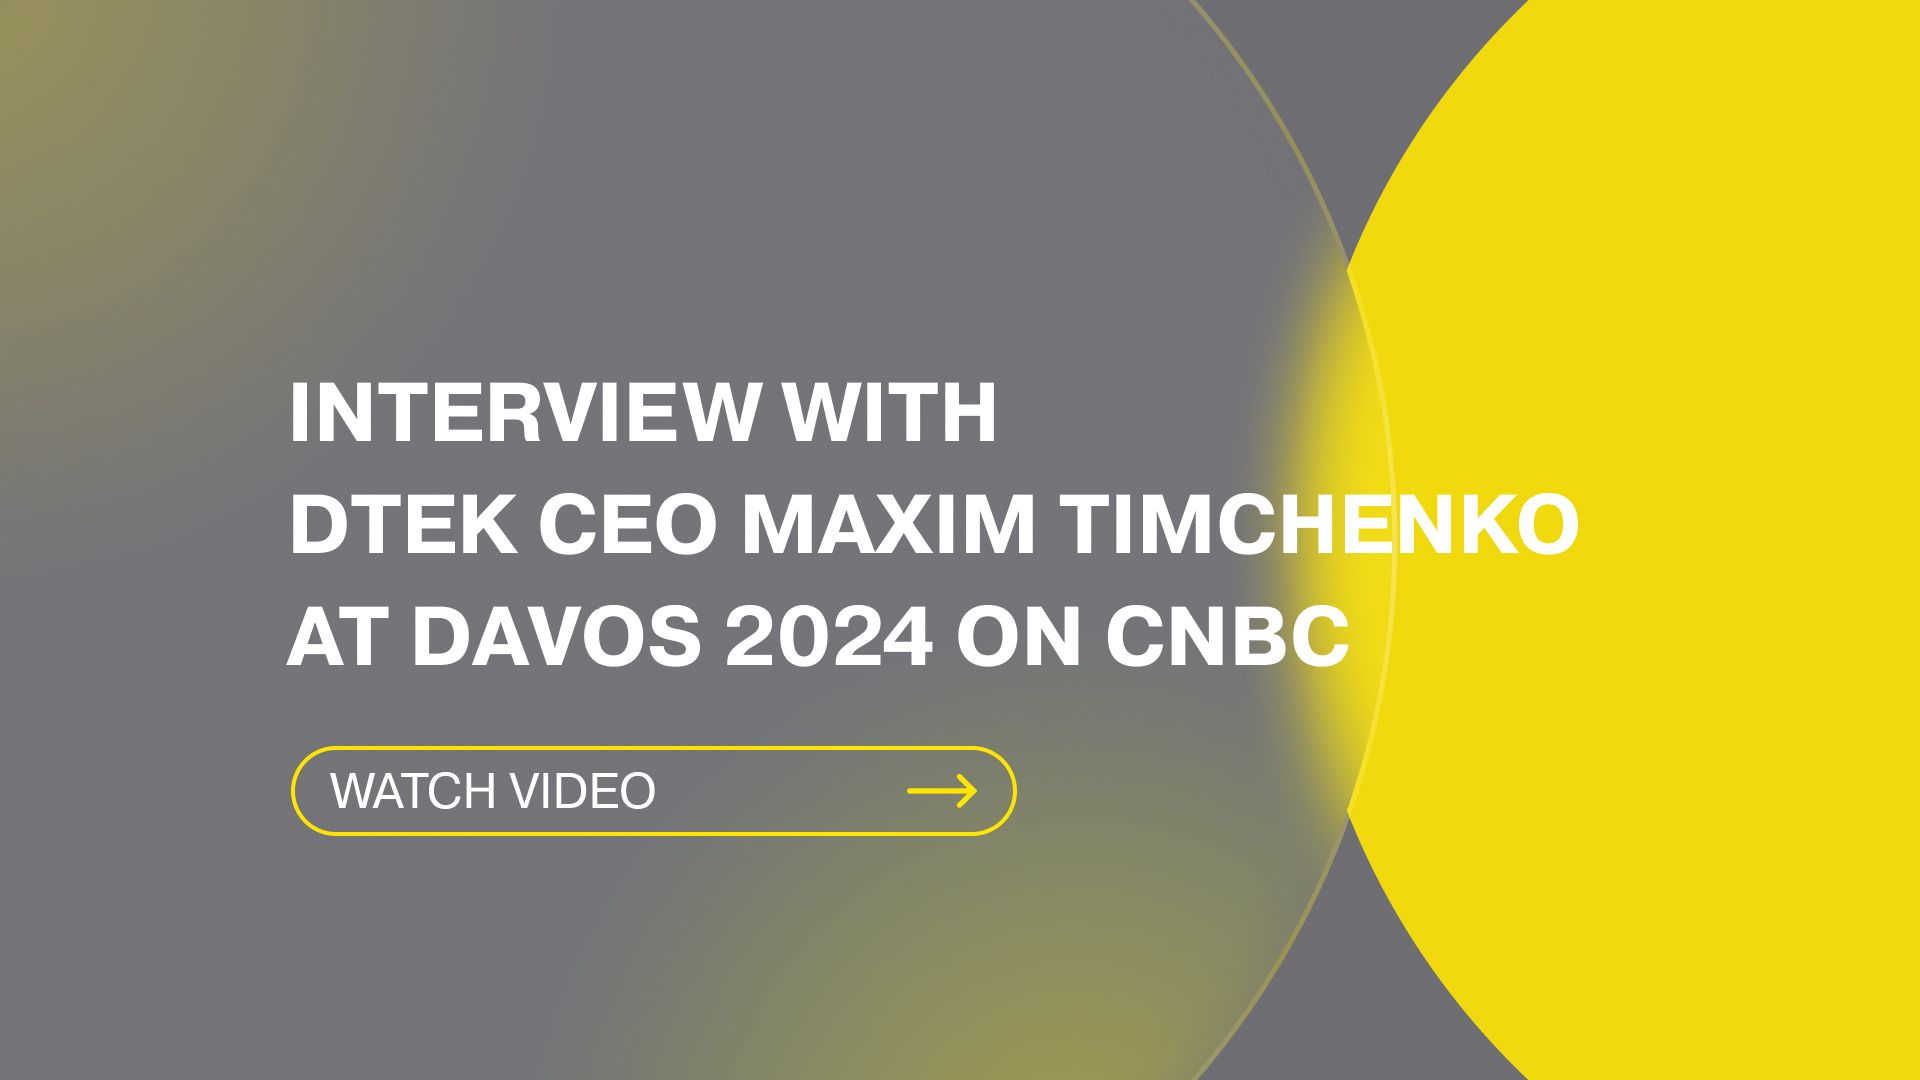 Interview with DTEK CEO Maxim Timchenko at Davos 2024 on CNBC